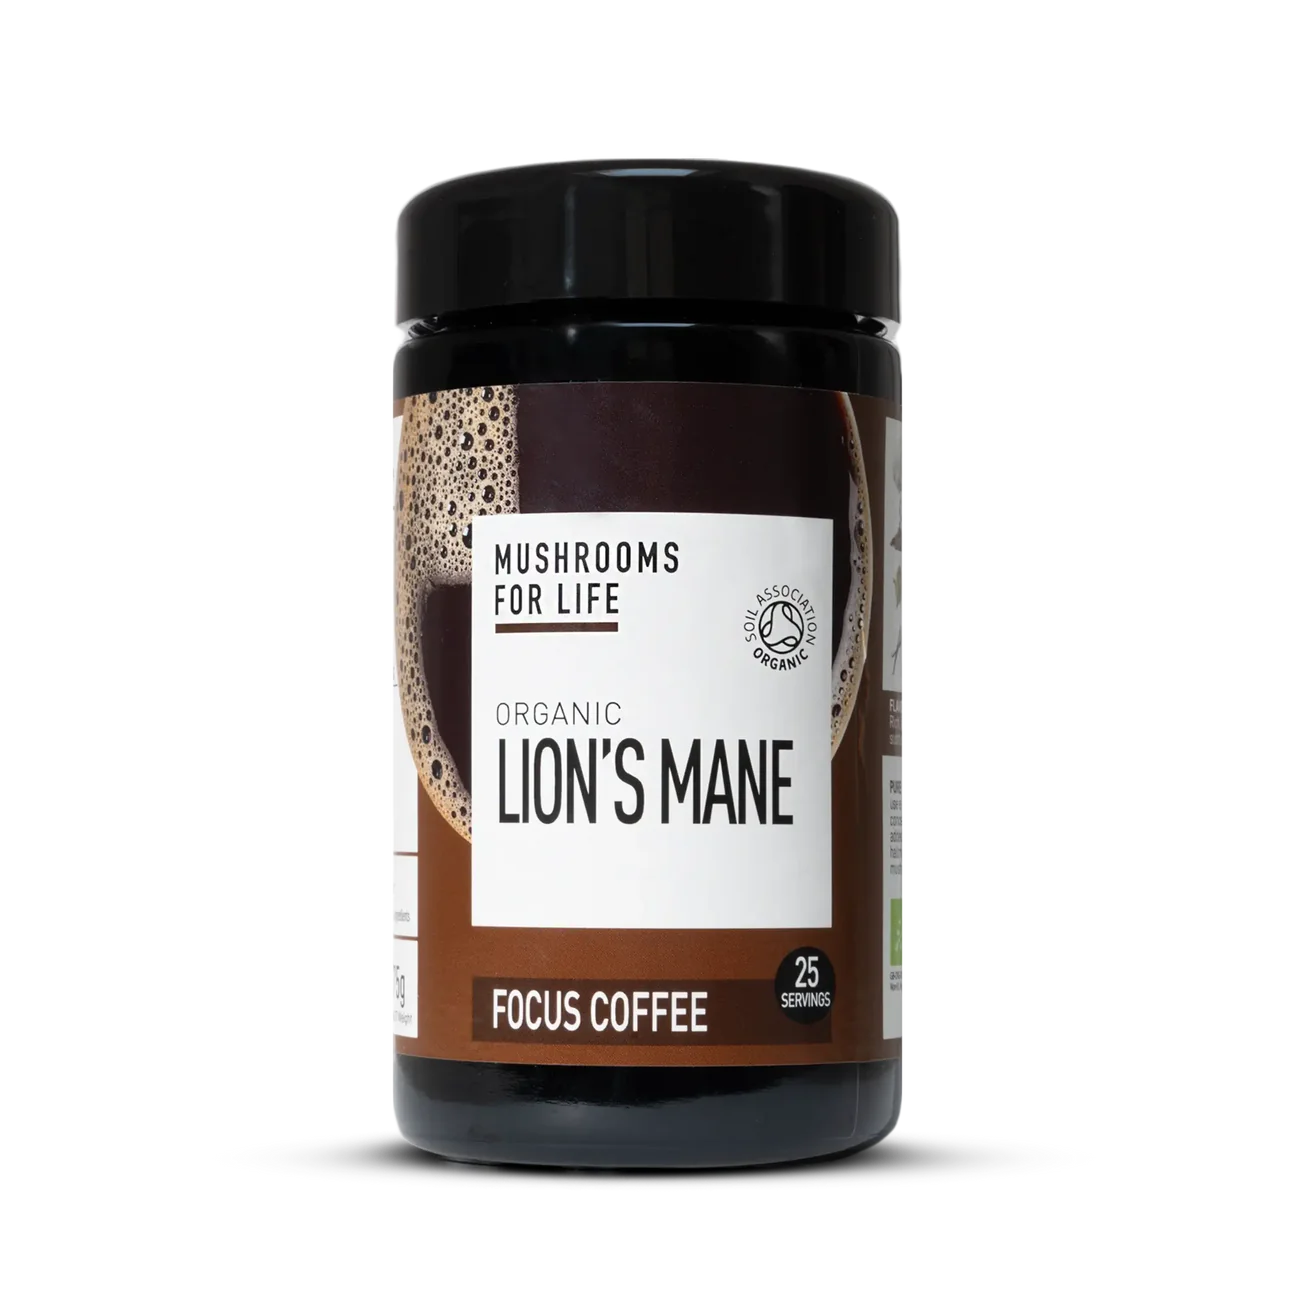 Organic Lion's Mane Focus Coffee - 75g